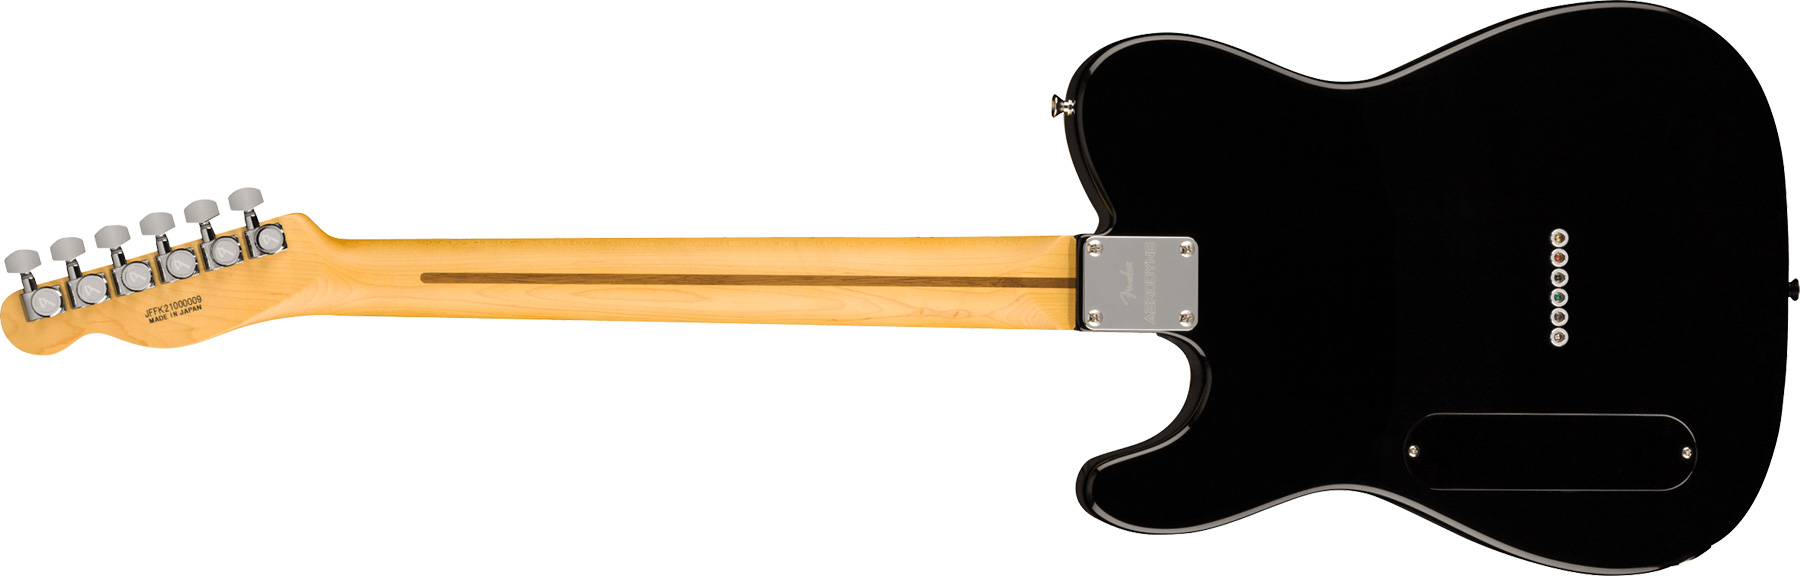 Fender Tele Aerodyne Special Jap 2s Ht Mn - Hot Rod Burst - Tel shape electric guitar - Variation 1